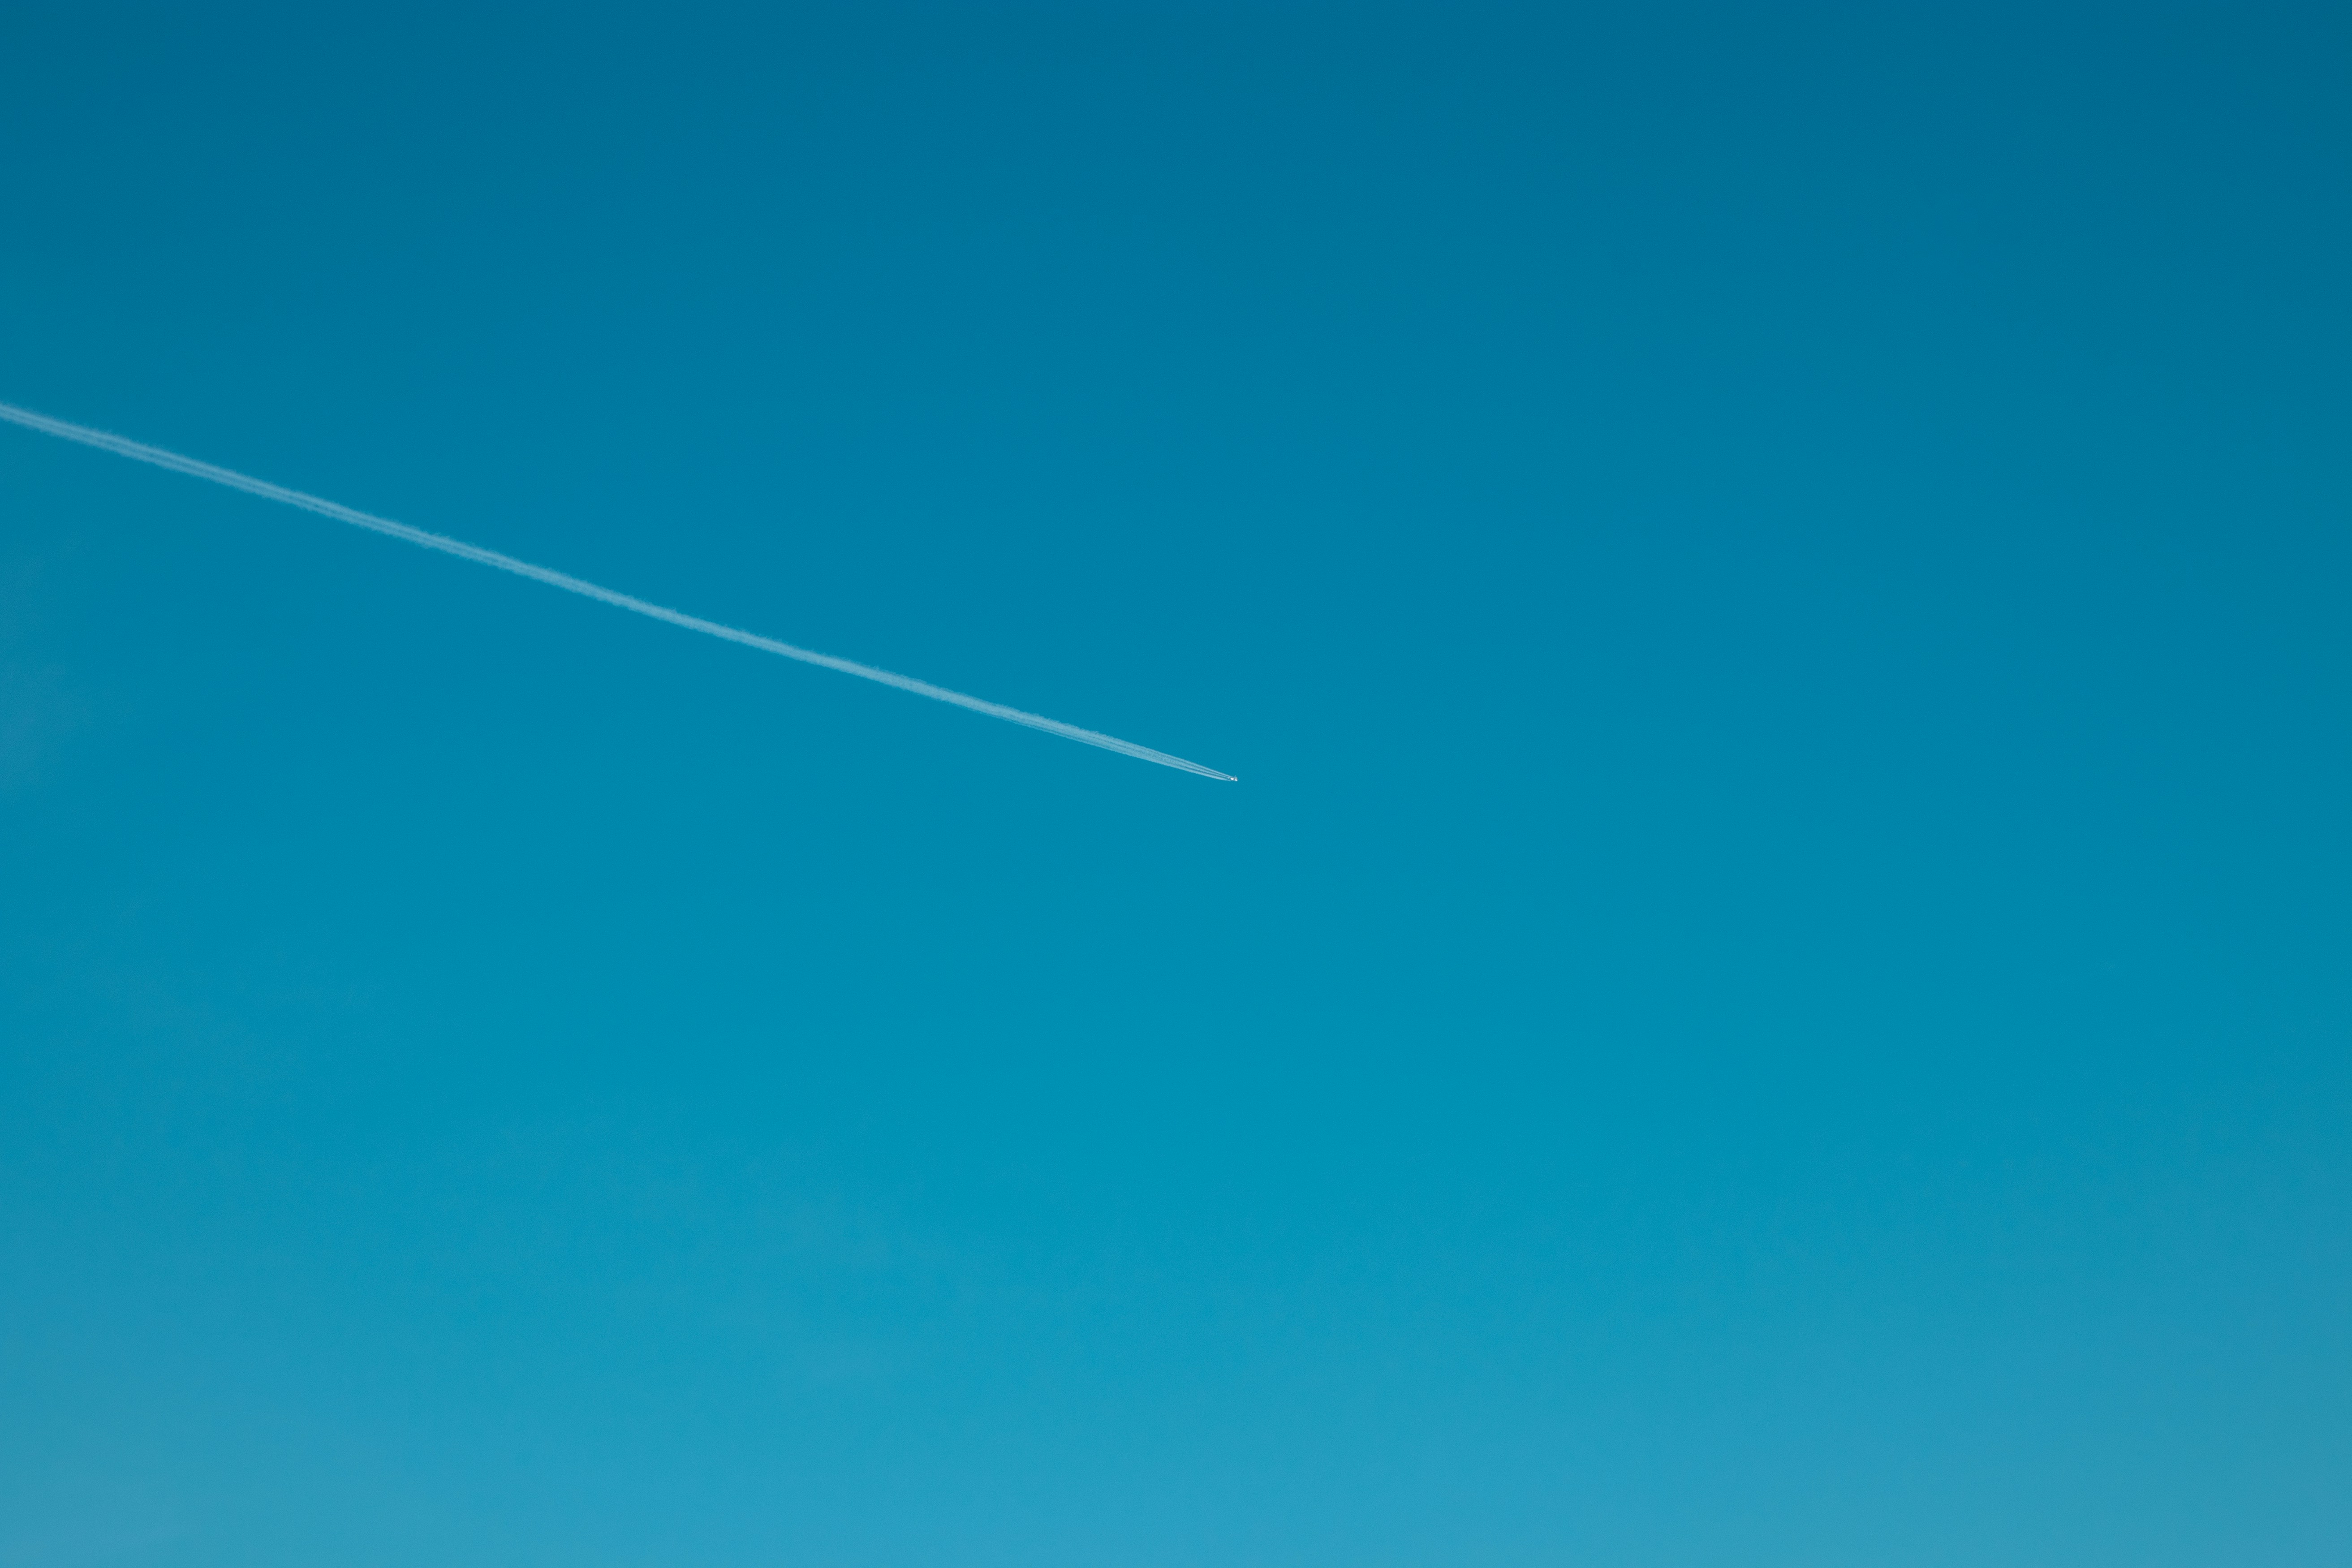 Plane through a clear blue sky, pattern, texture.